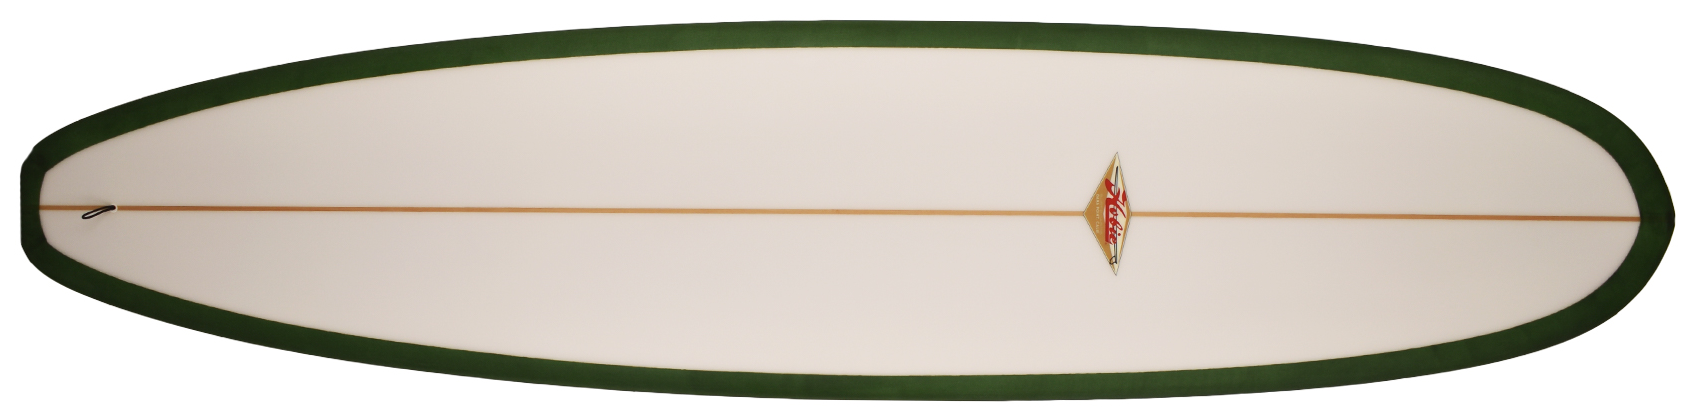 Hobie Greenhorn Midlength Surfboard